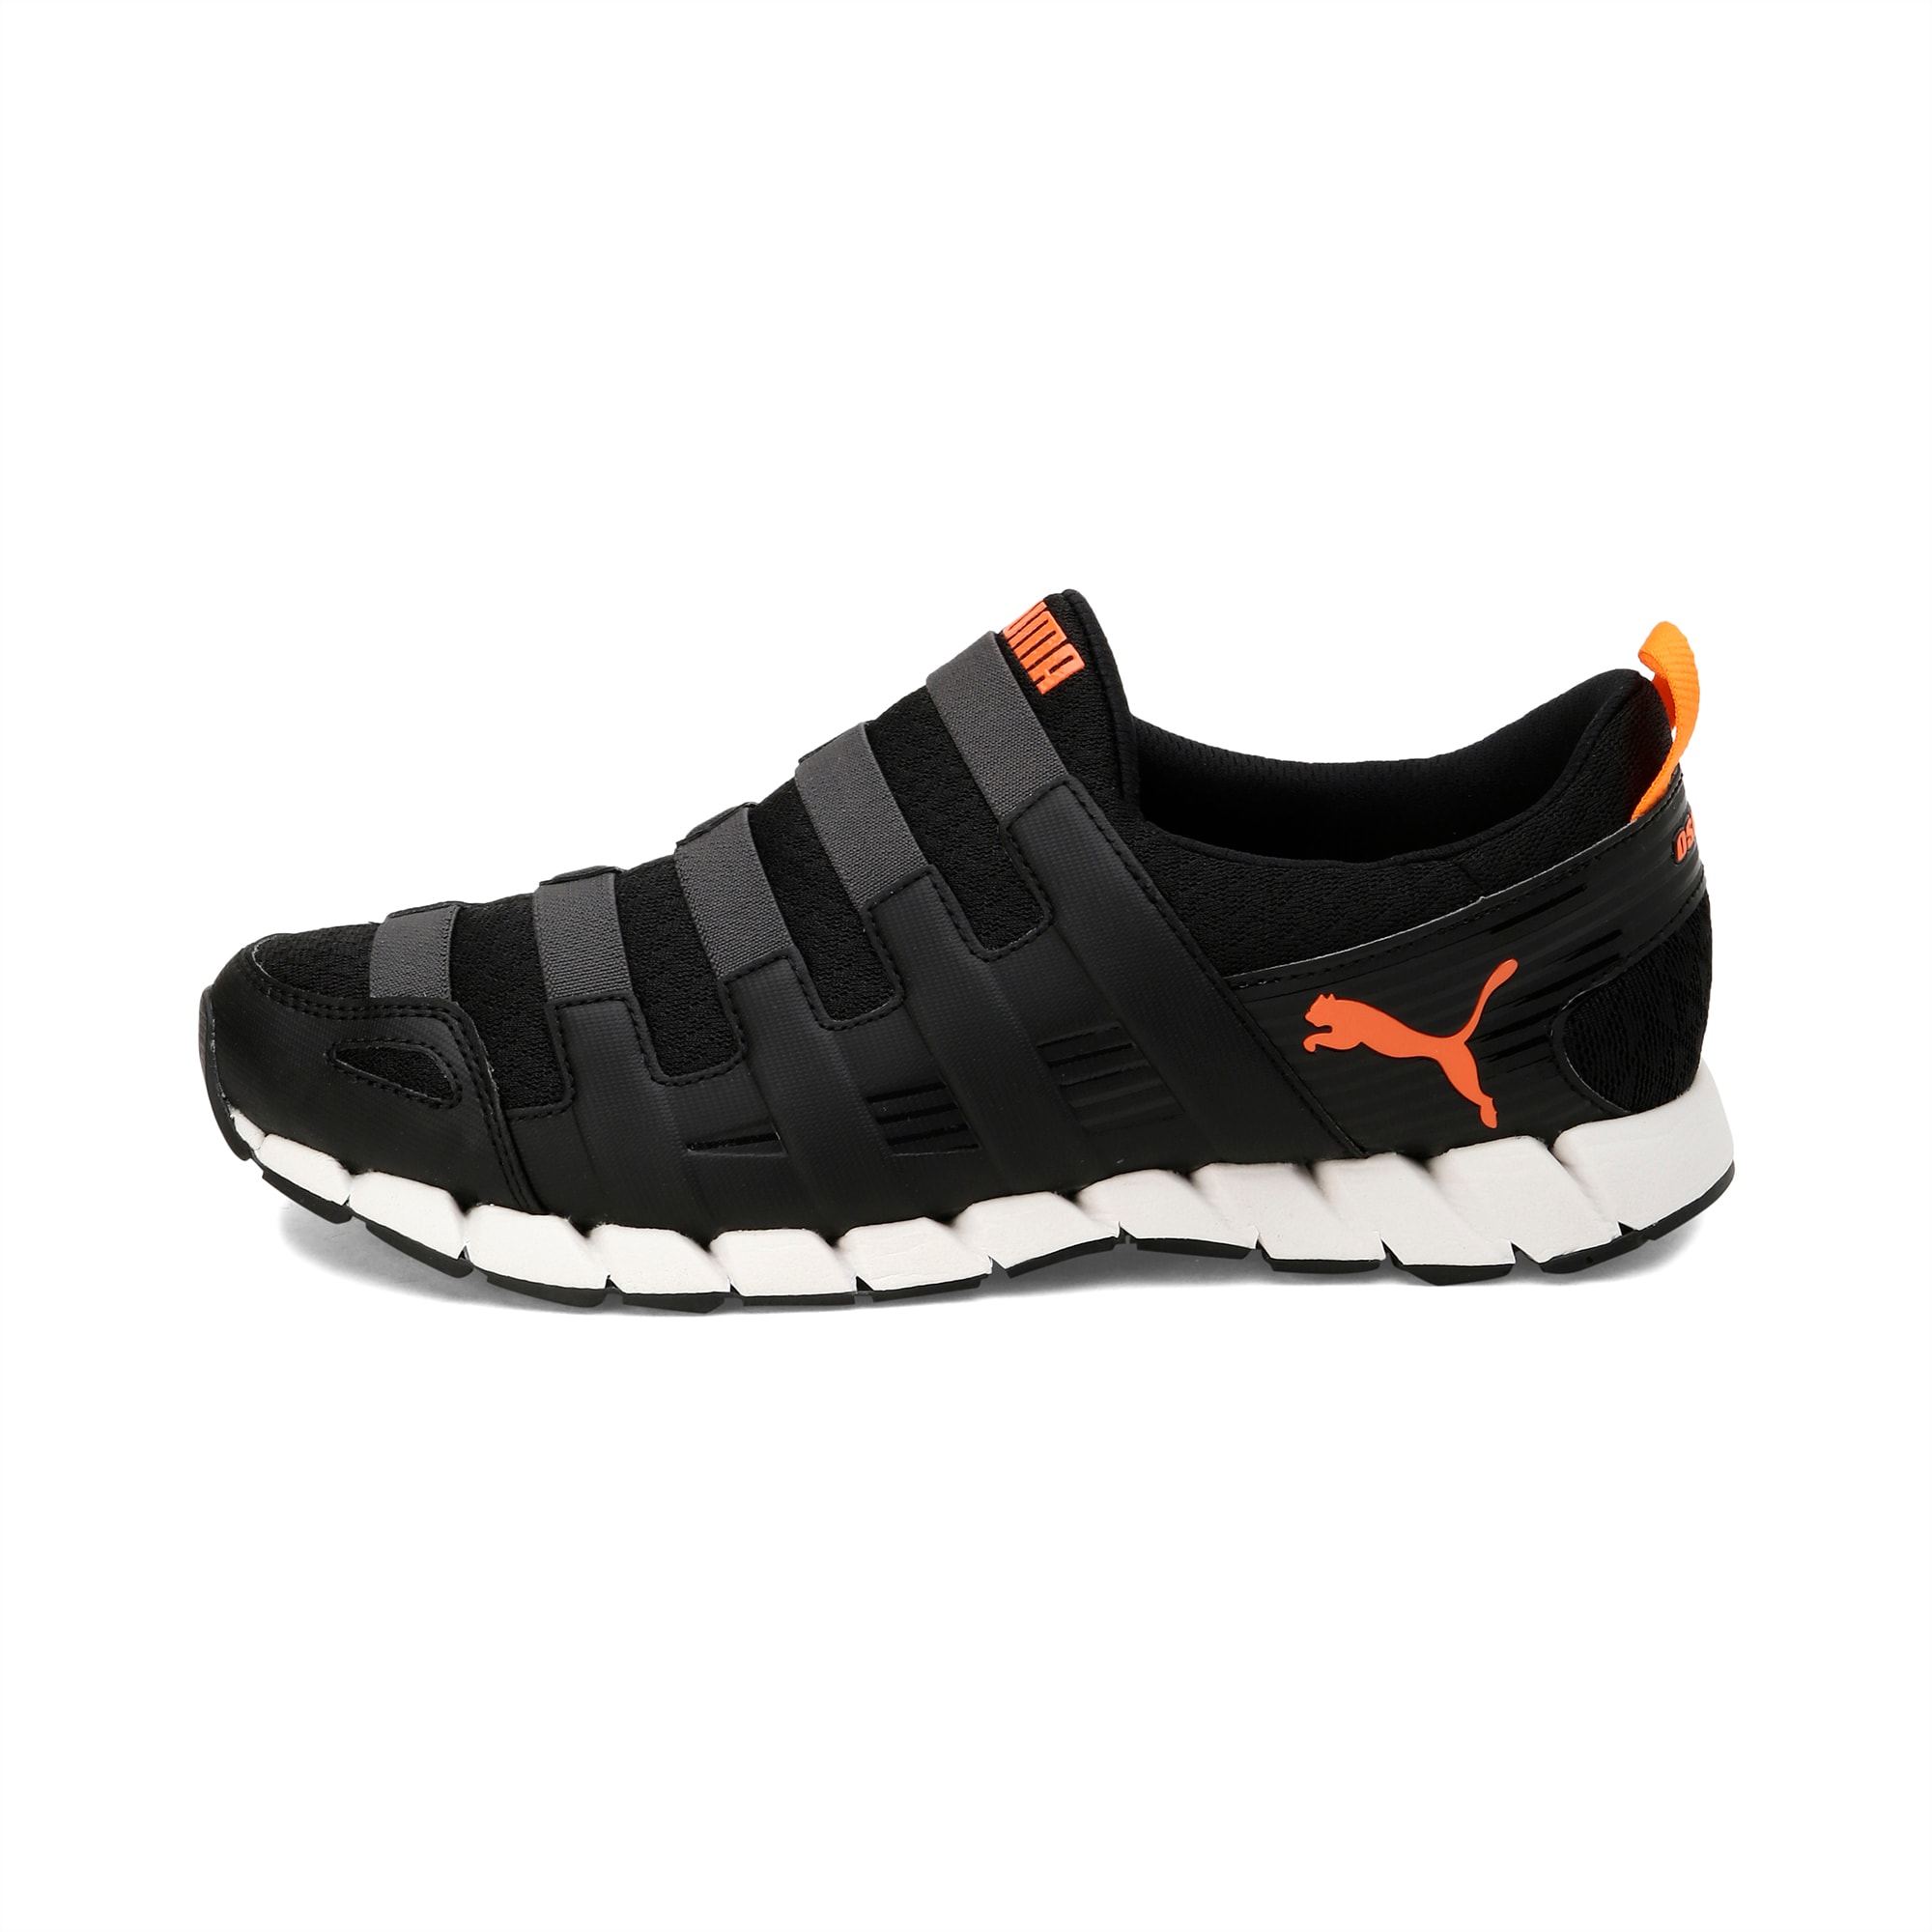 Osu v4 FM Walking Shoes | black-periscope-orange | PUMA spl50 | PUMA